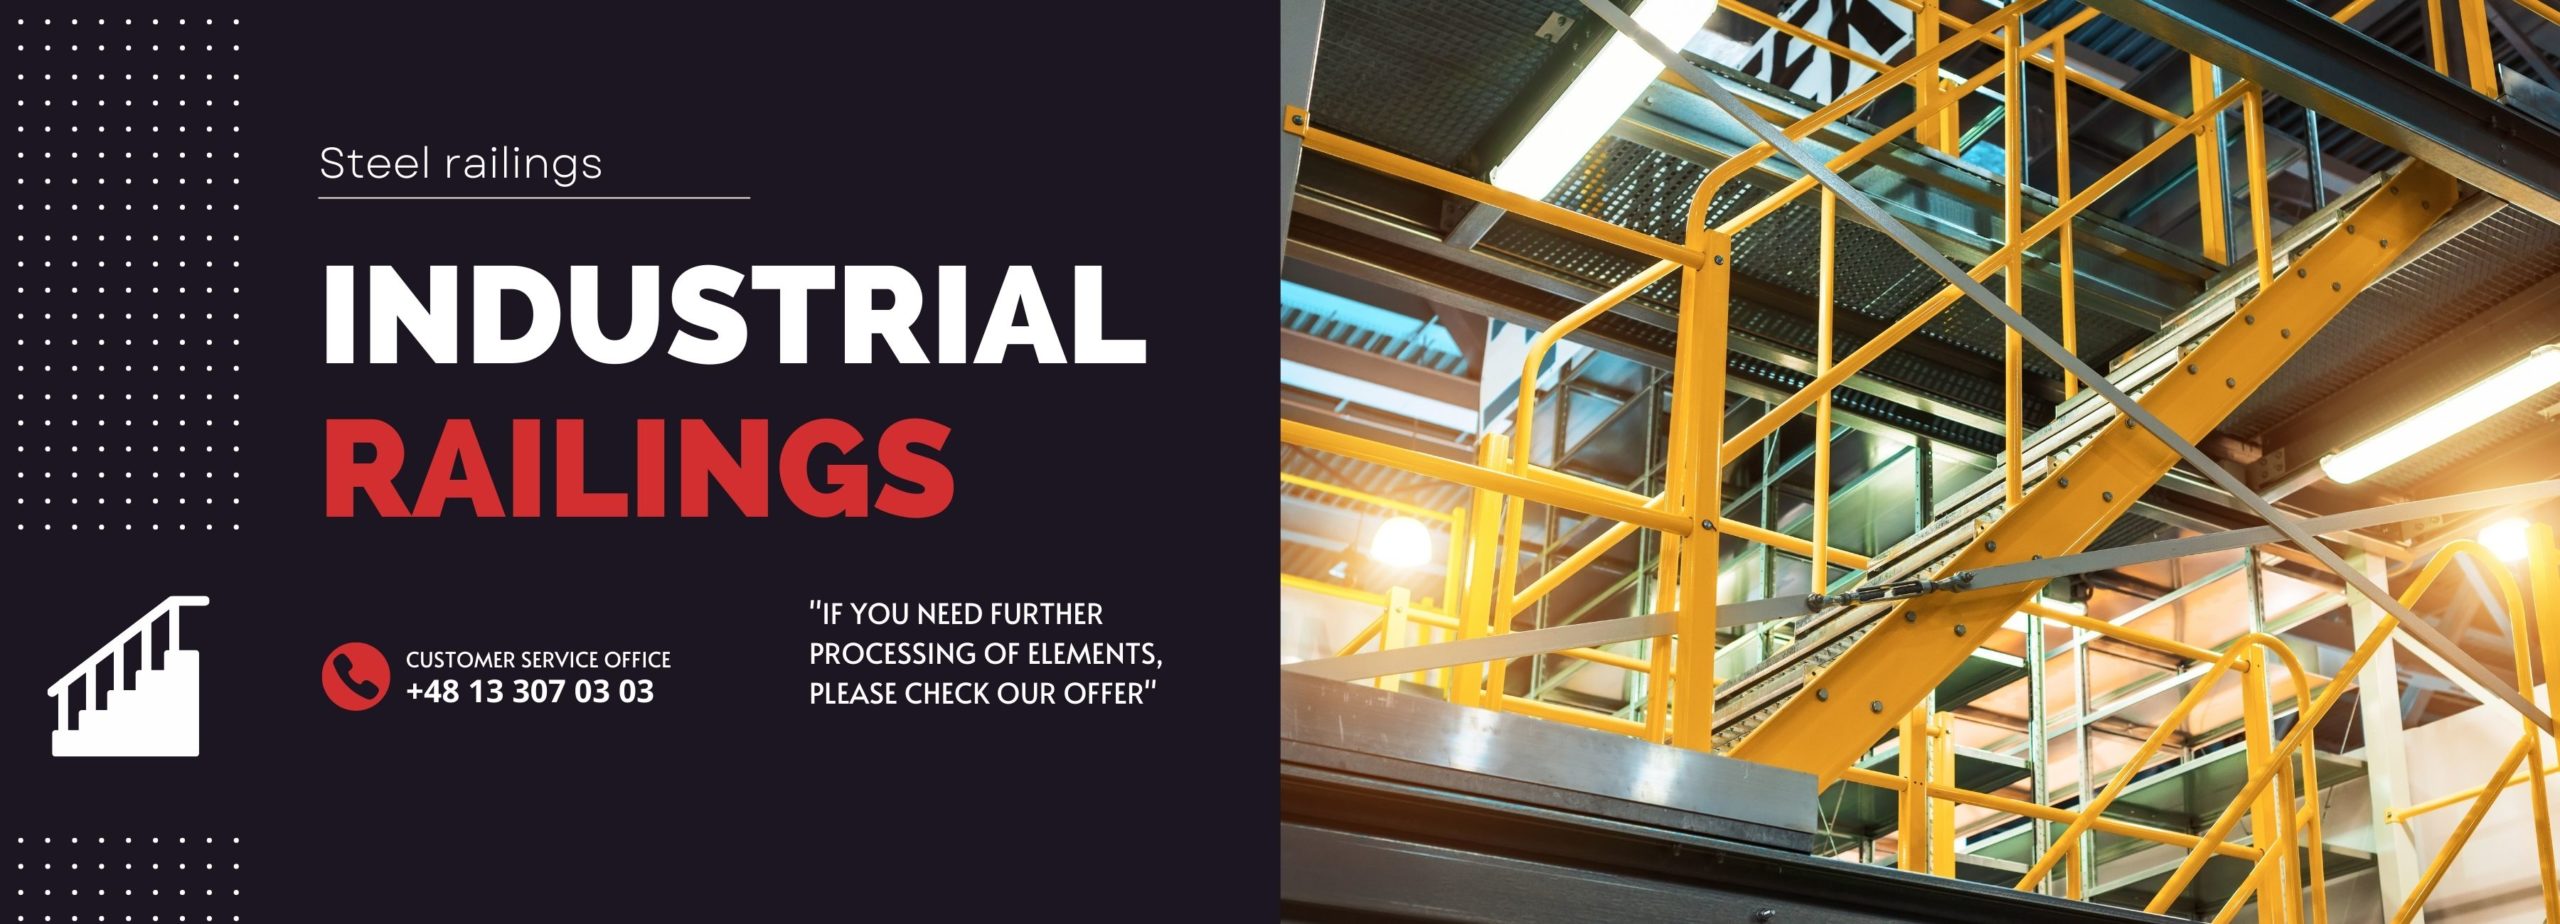 Industrial railings manufacturer -2